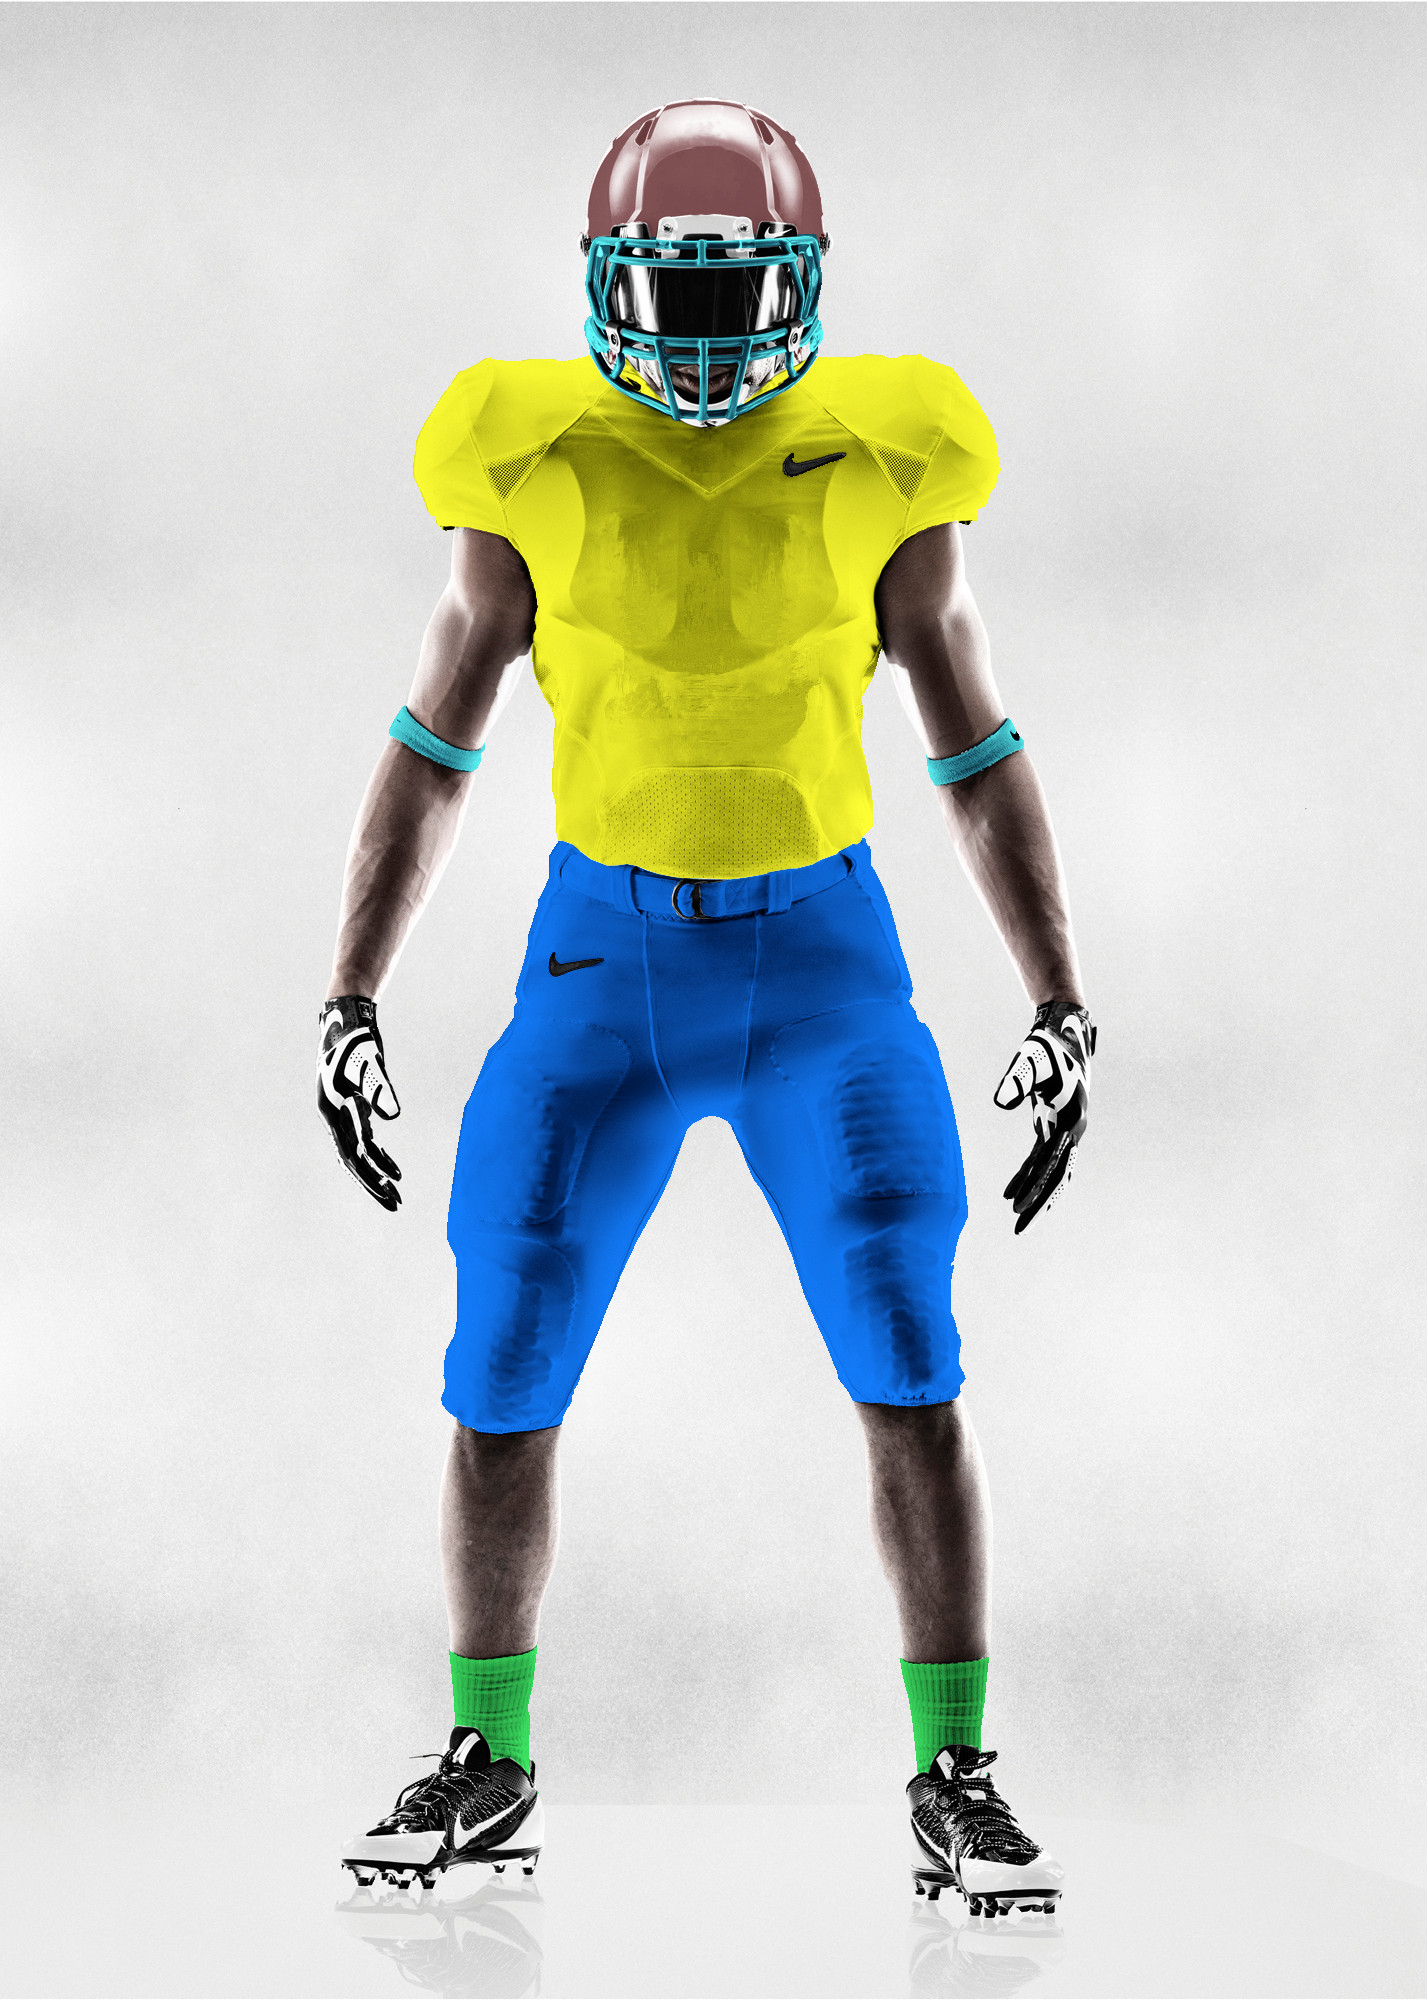 Nike Football Uniform Template by NextGen10 on DeviantArt